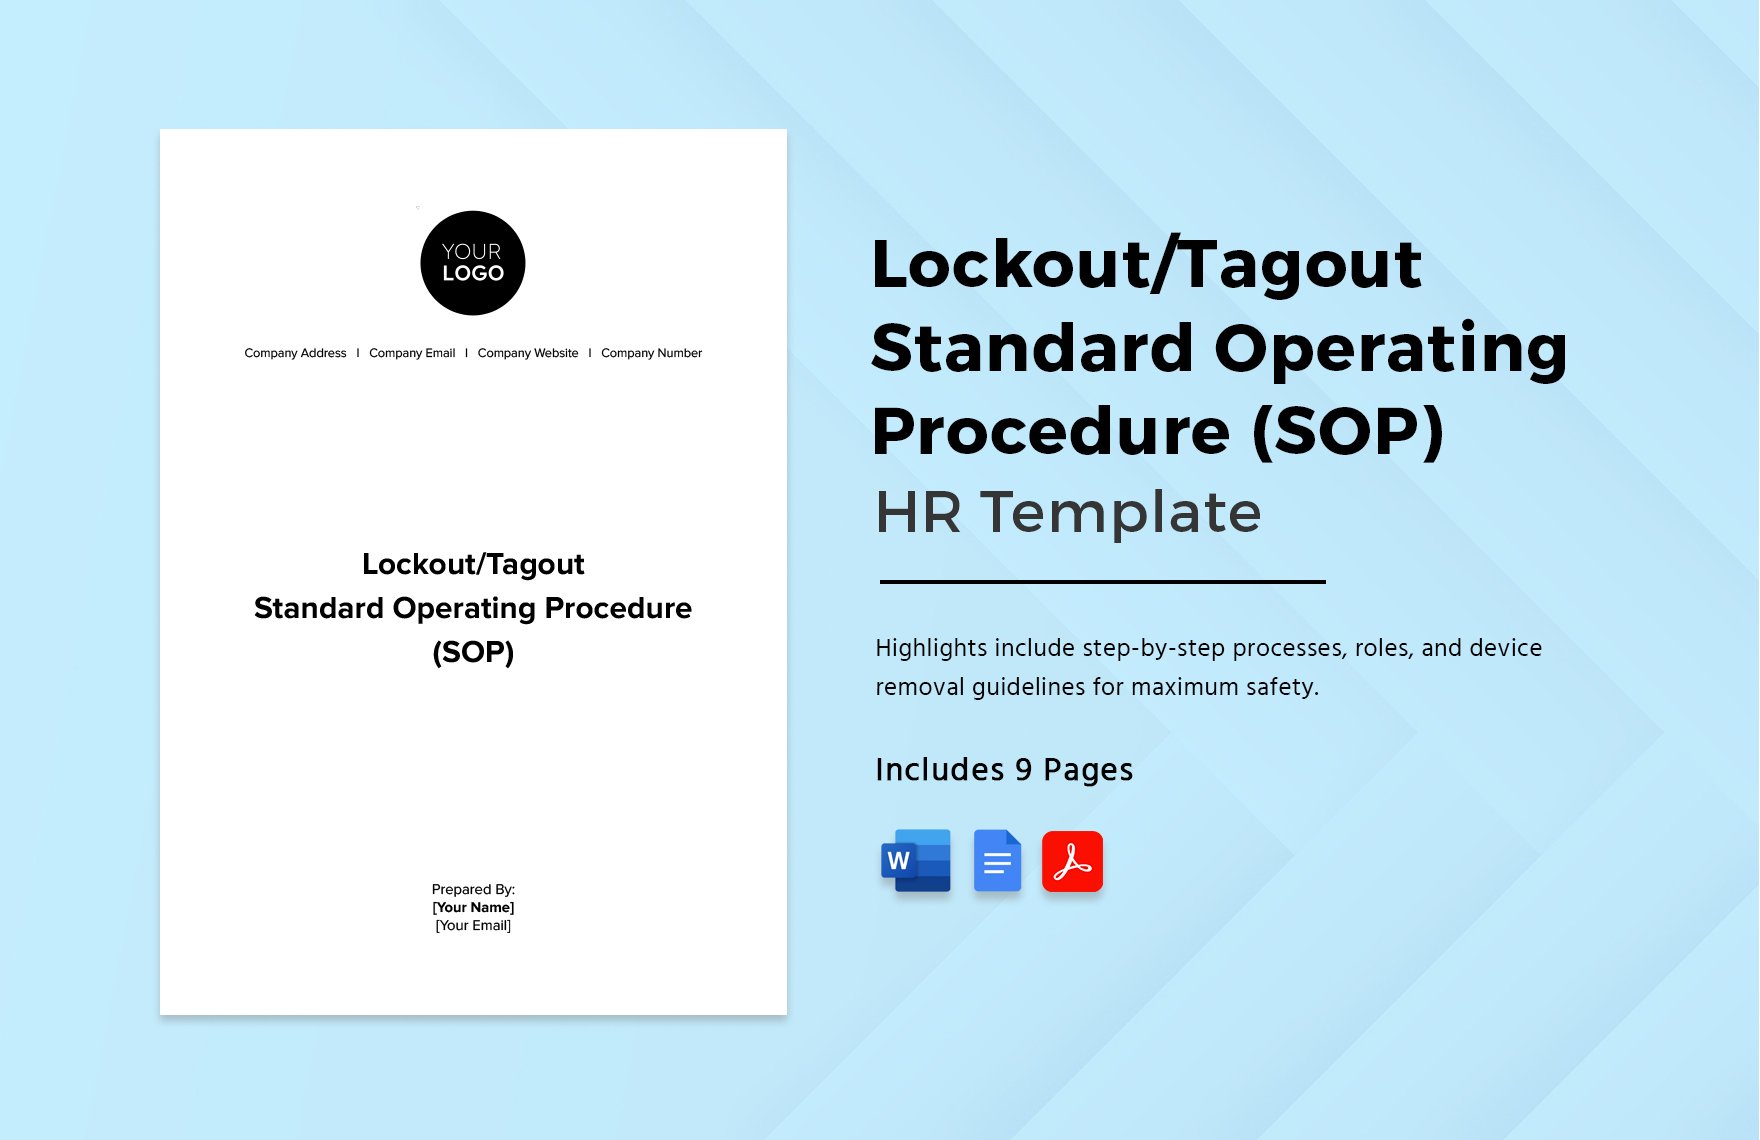 Lockout/Tagout Standard Operating Procedure (SOP) HR Template